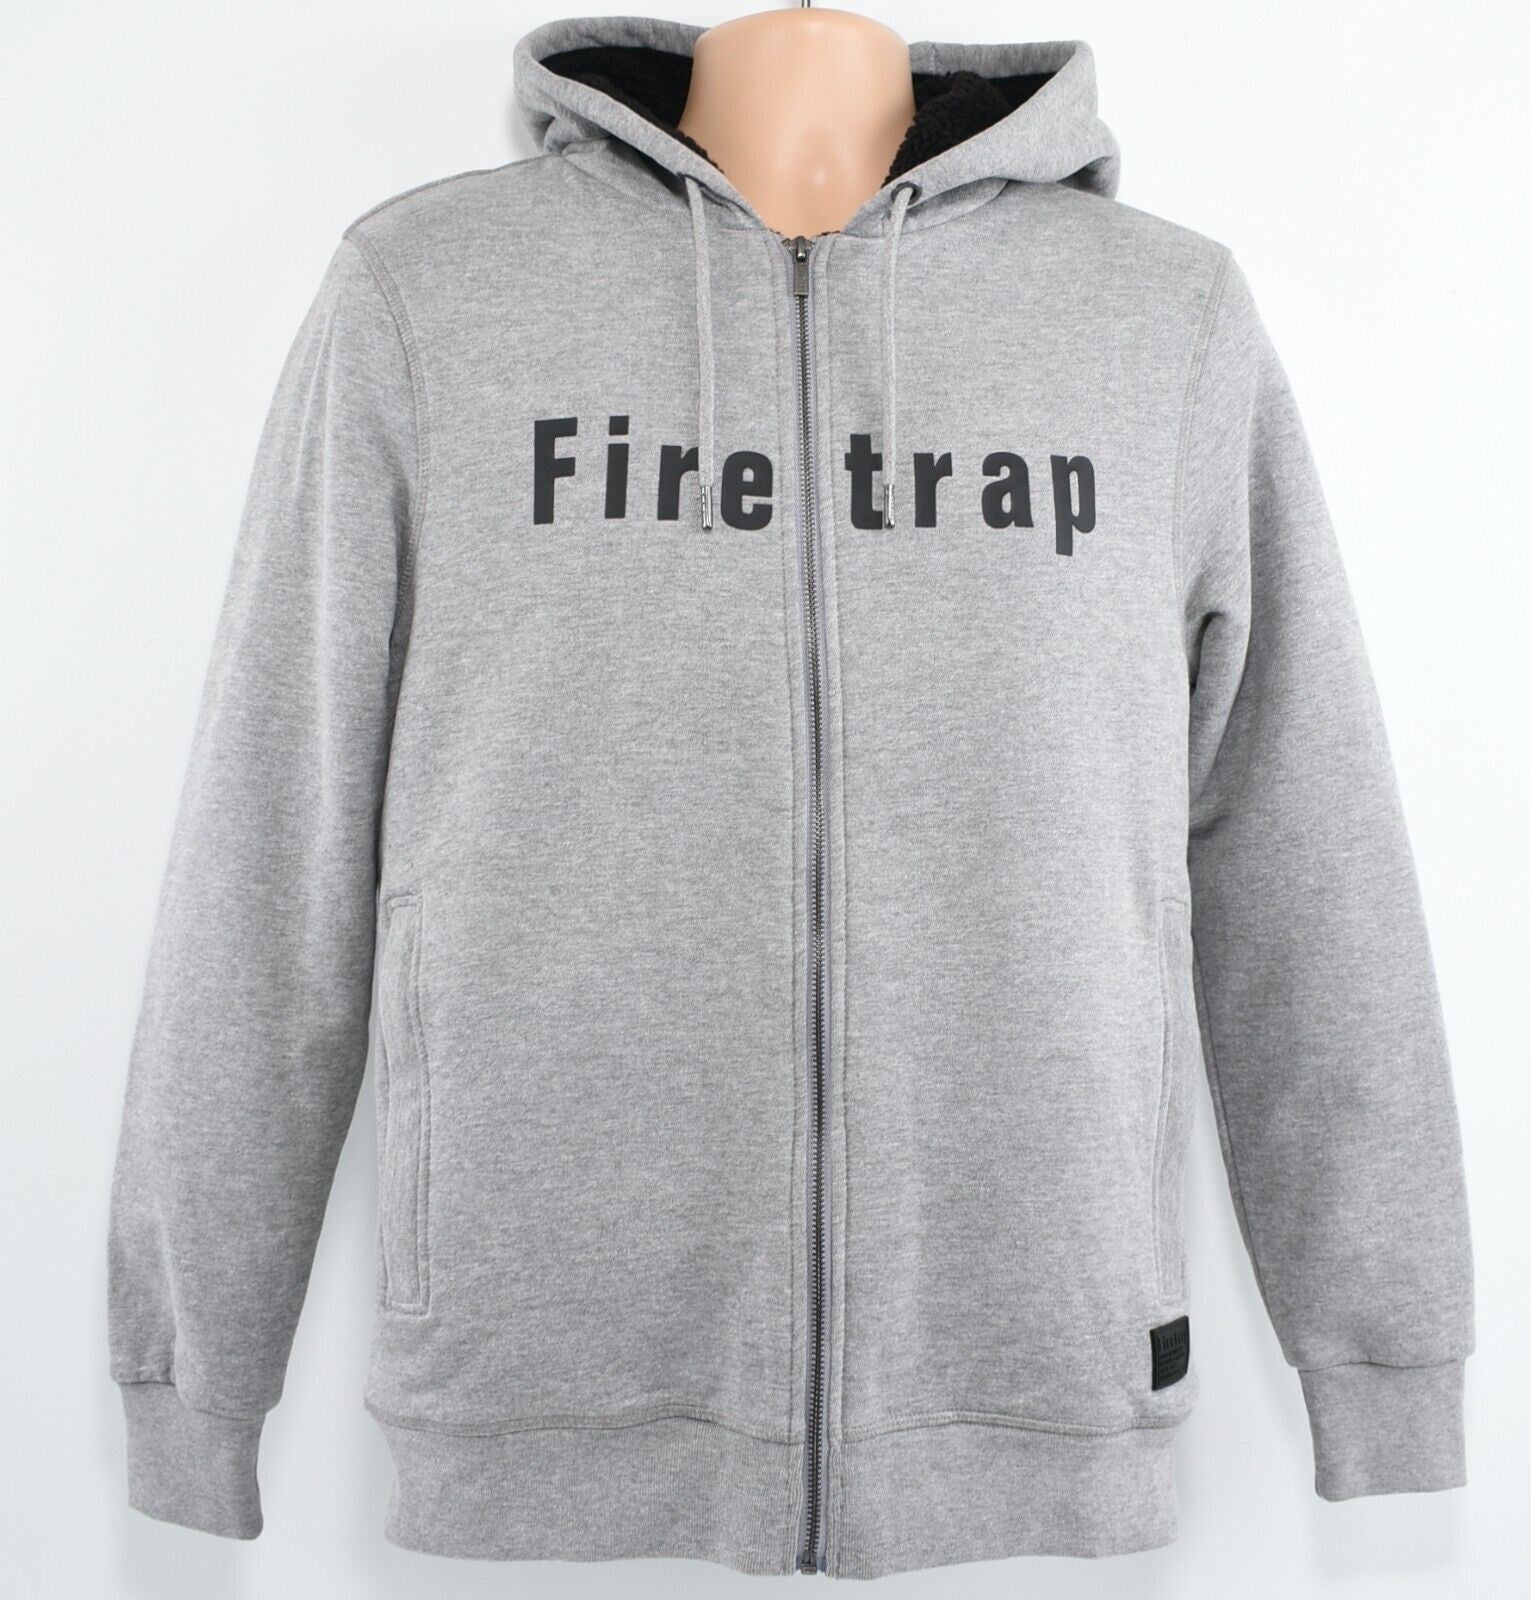 FIRETRAP Men's Zip Hoodie Jacket, Teddy Fleece Lining, Grey Marl, size LARGE